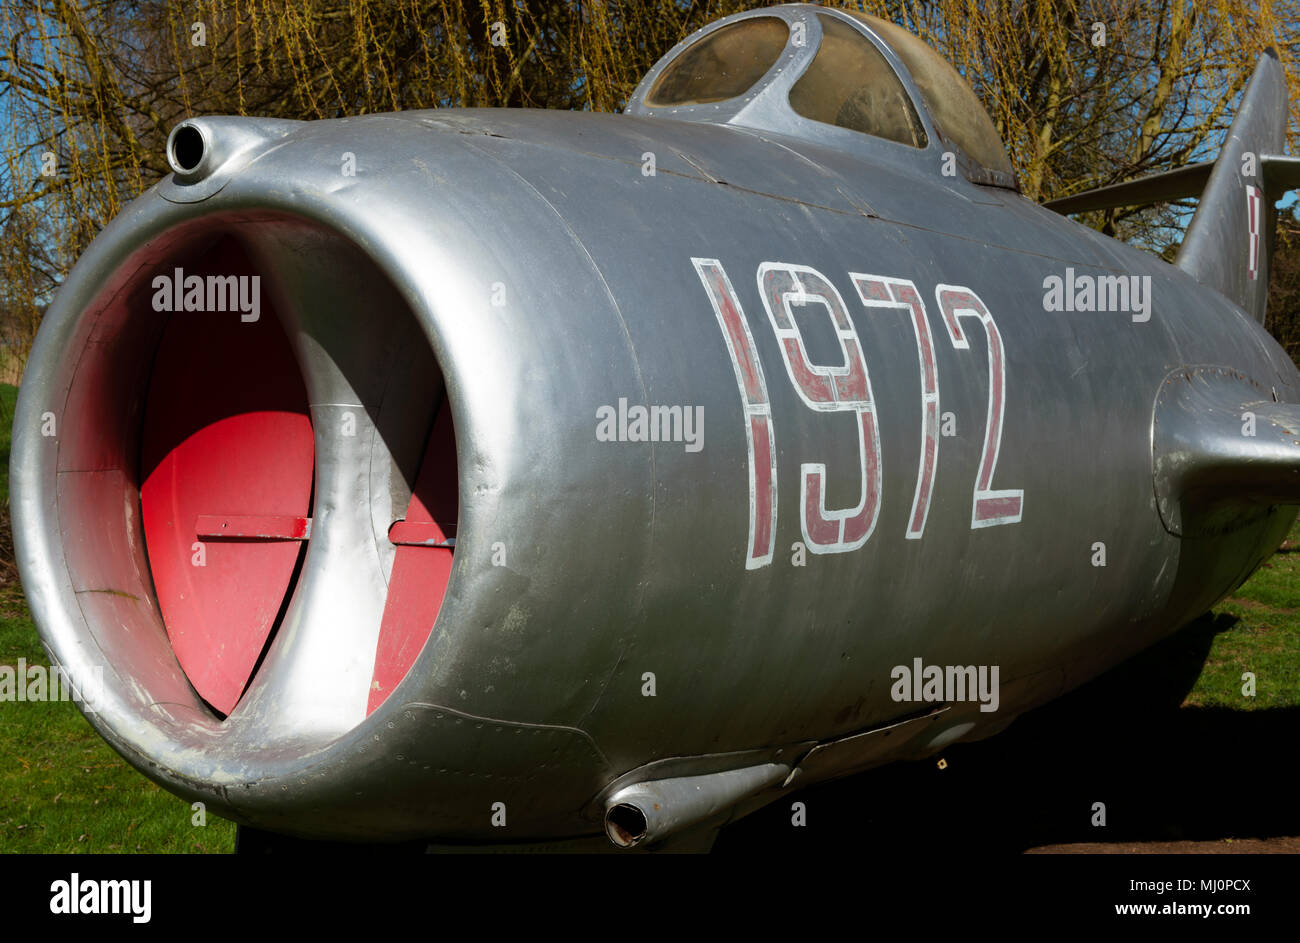 En avion de chasse MIG-15, Norfolk et Suffolk Aviation Museum, Flixton, Suffolk, UK. Banque D'Images